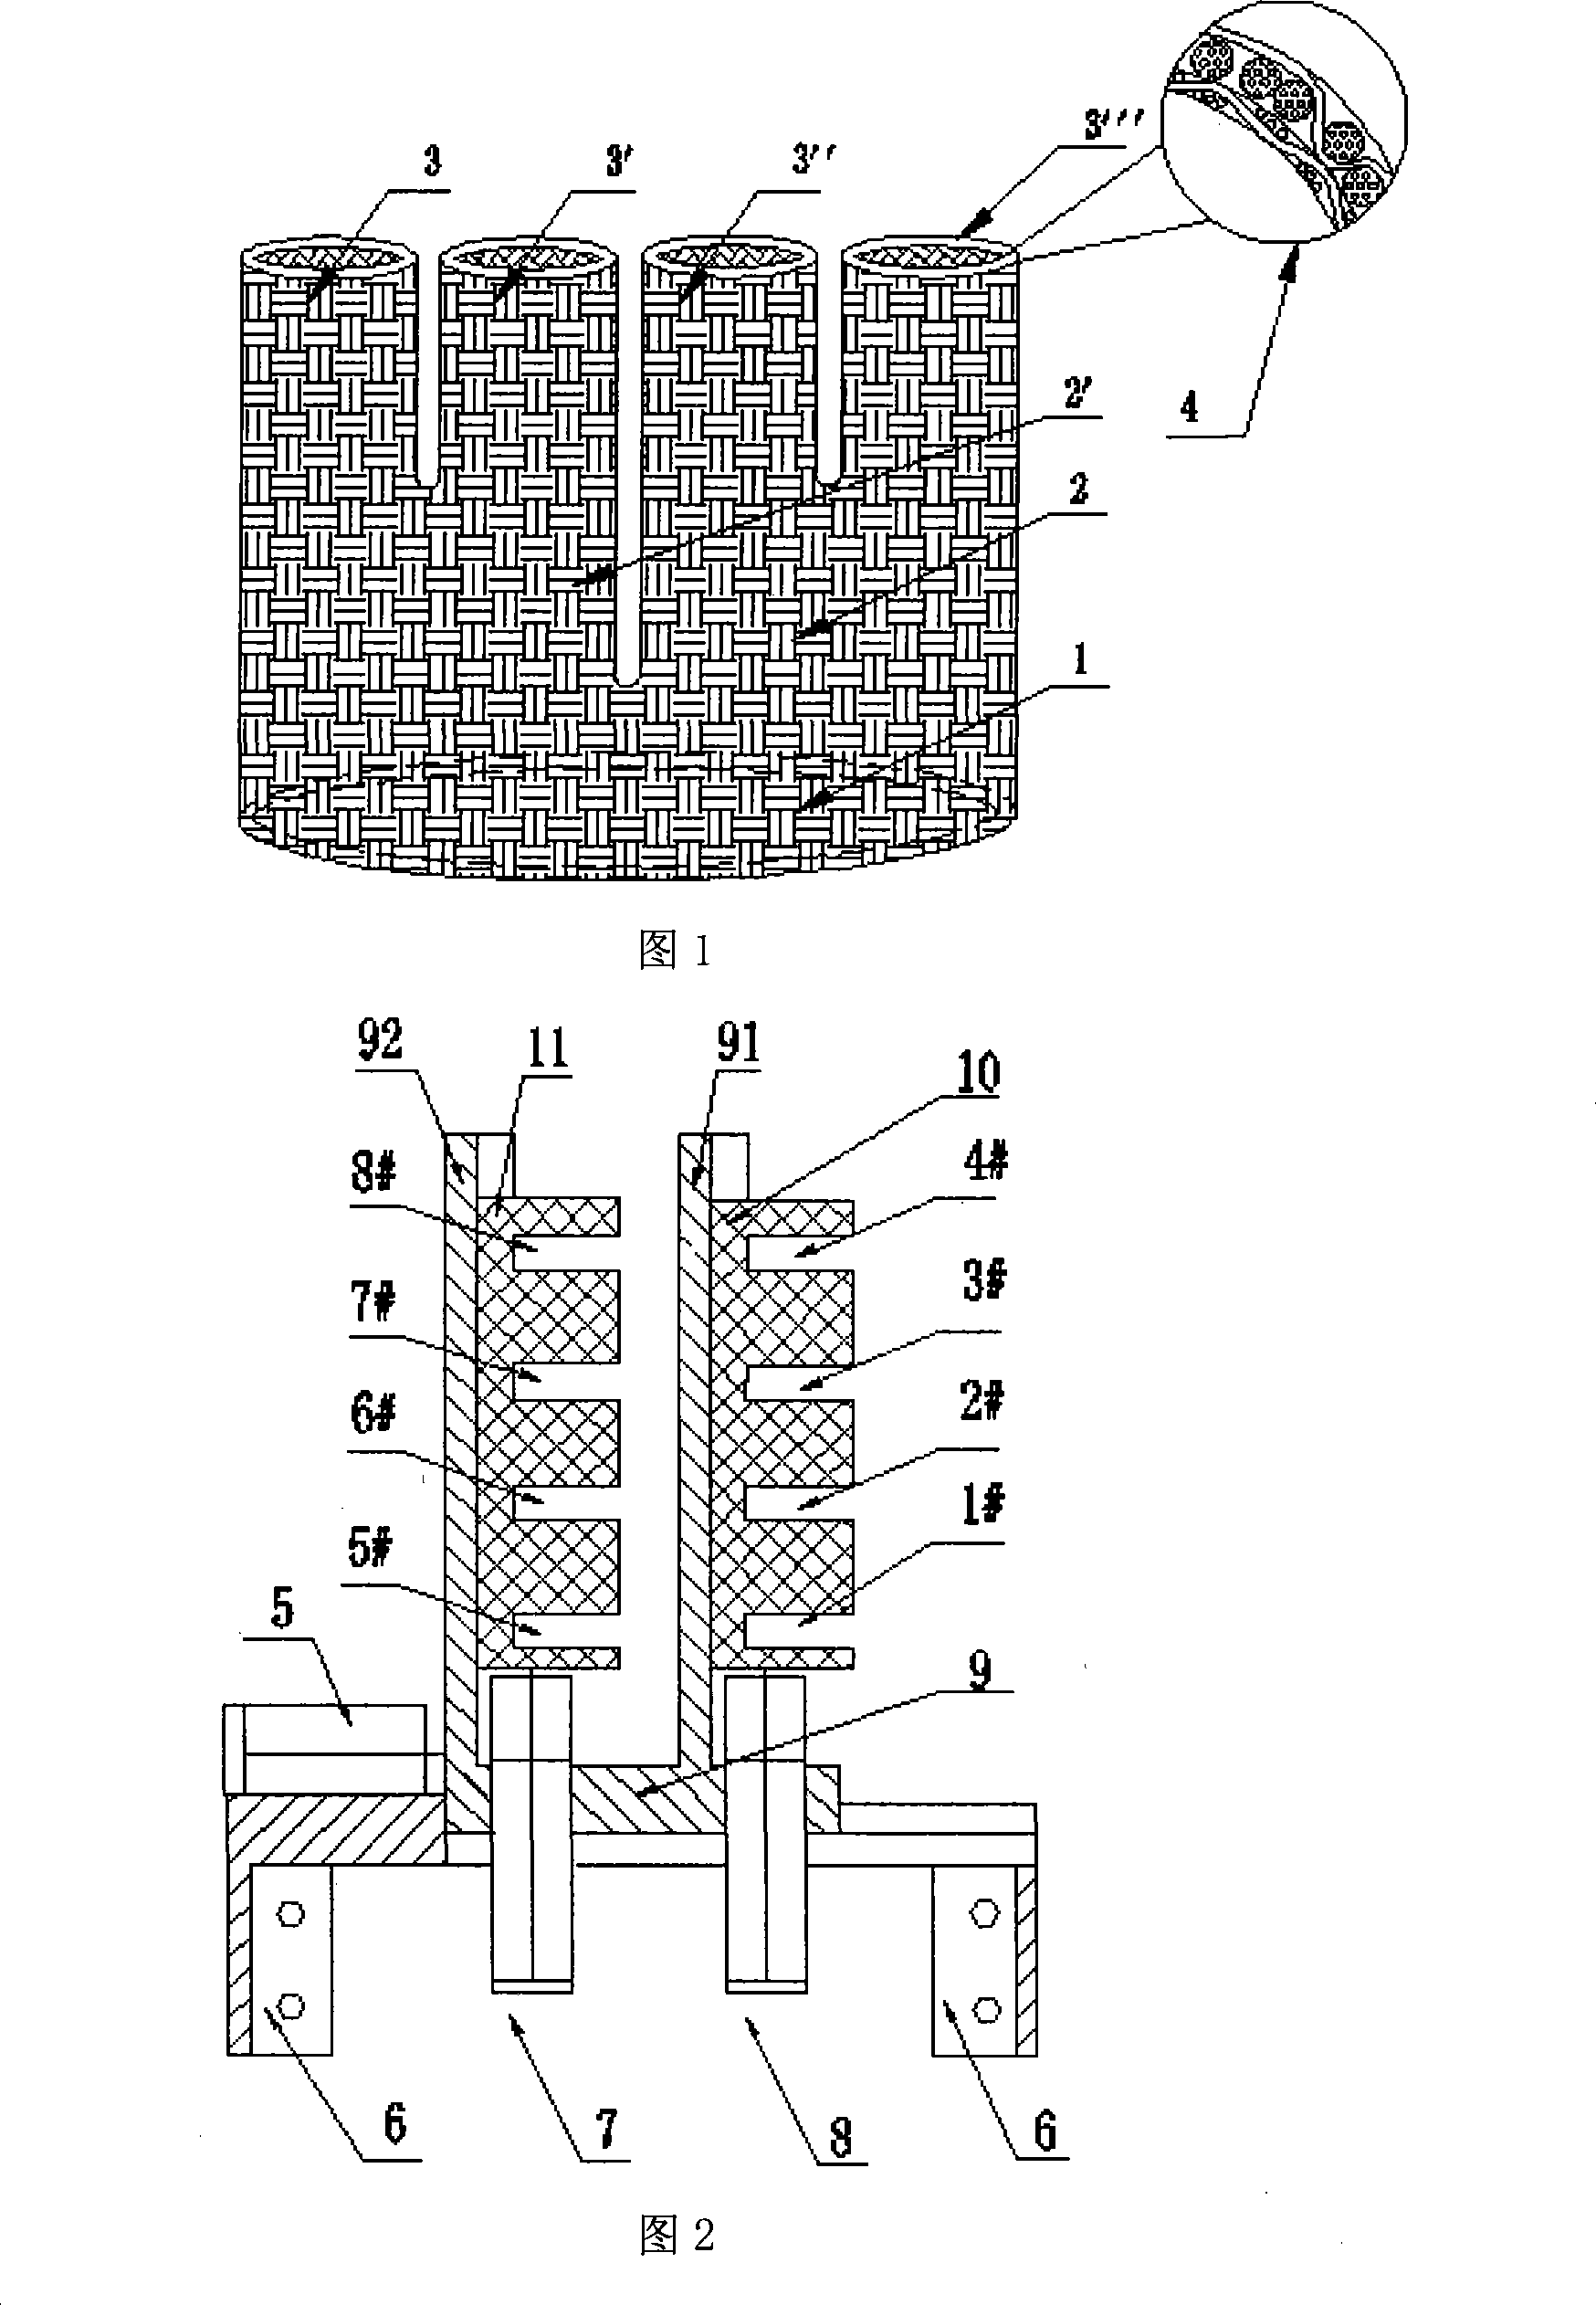 1*8 multiple shuttle box mechanism for rigid rapier weaving machine